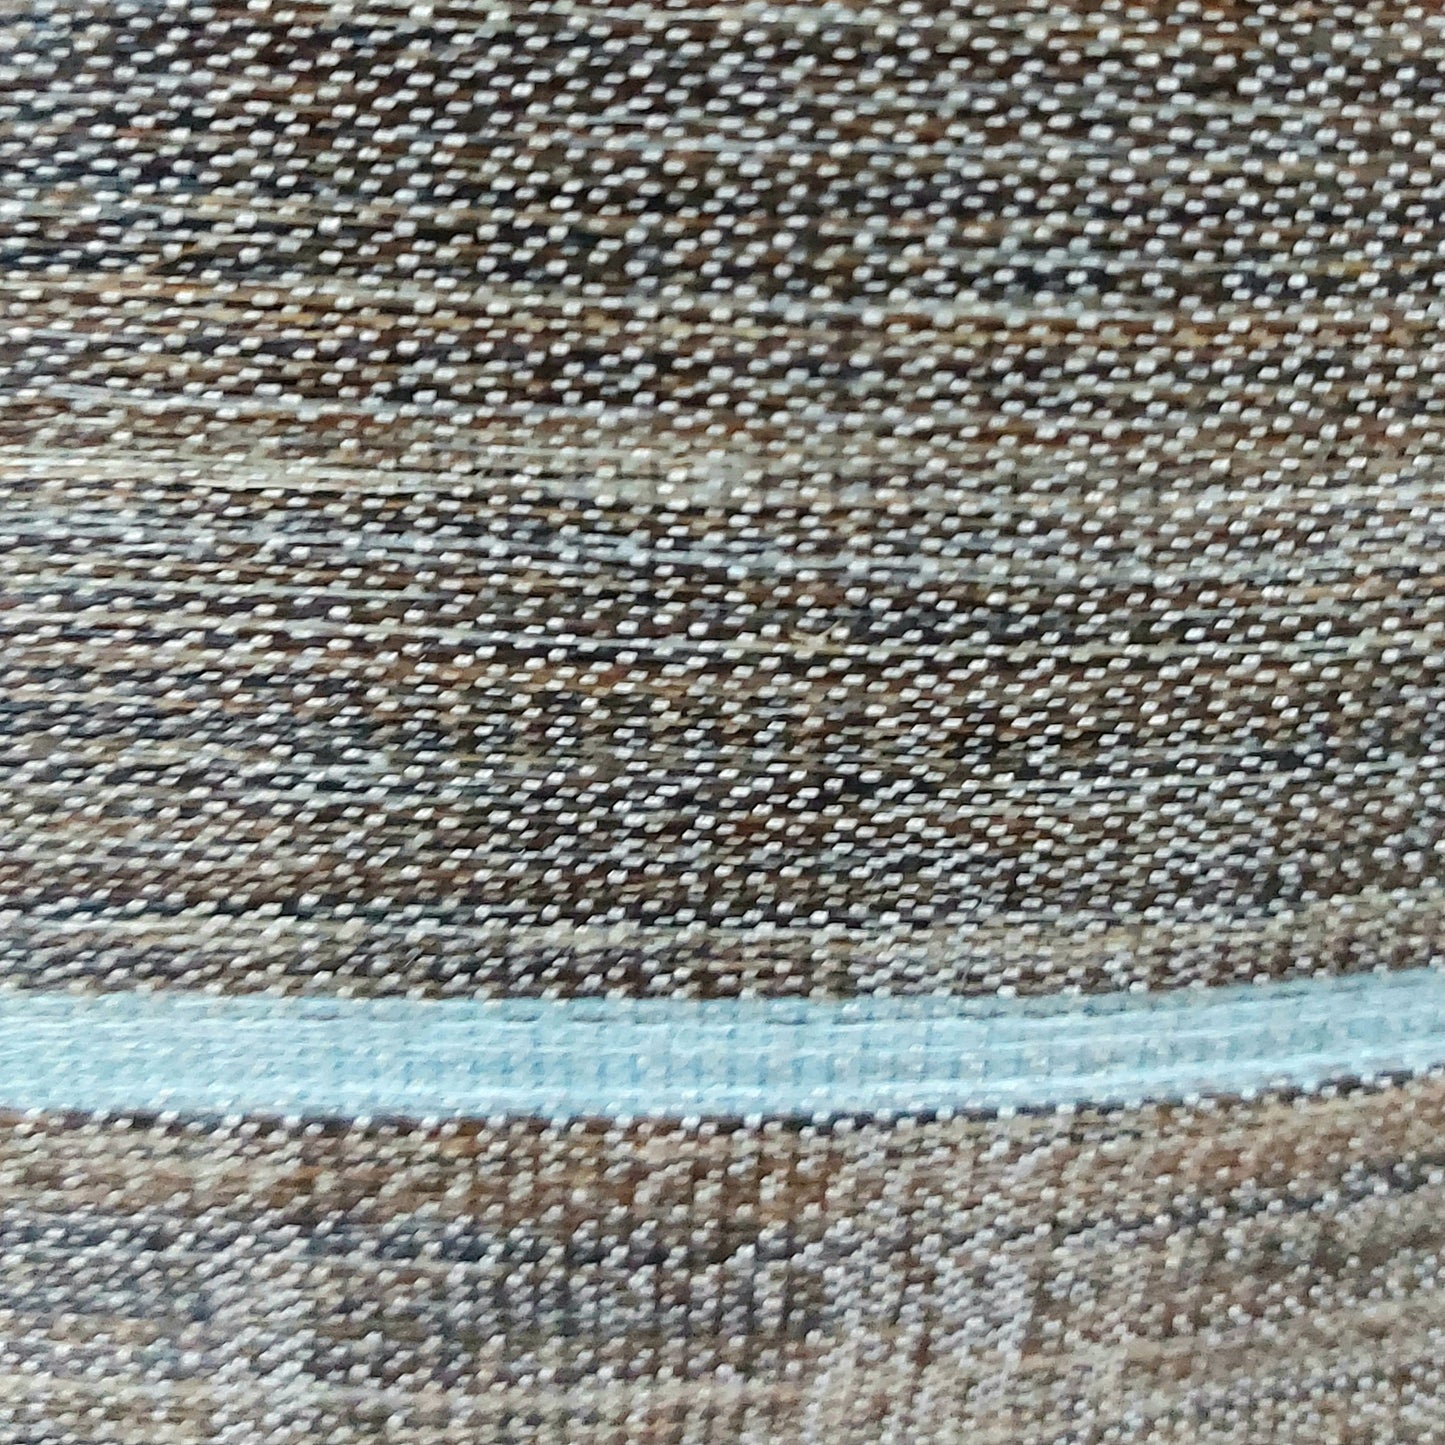 Finland, Waveweaver's Wool / Hannele Köngäs, Striped horse hair bag